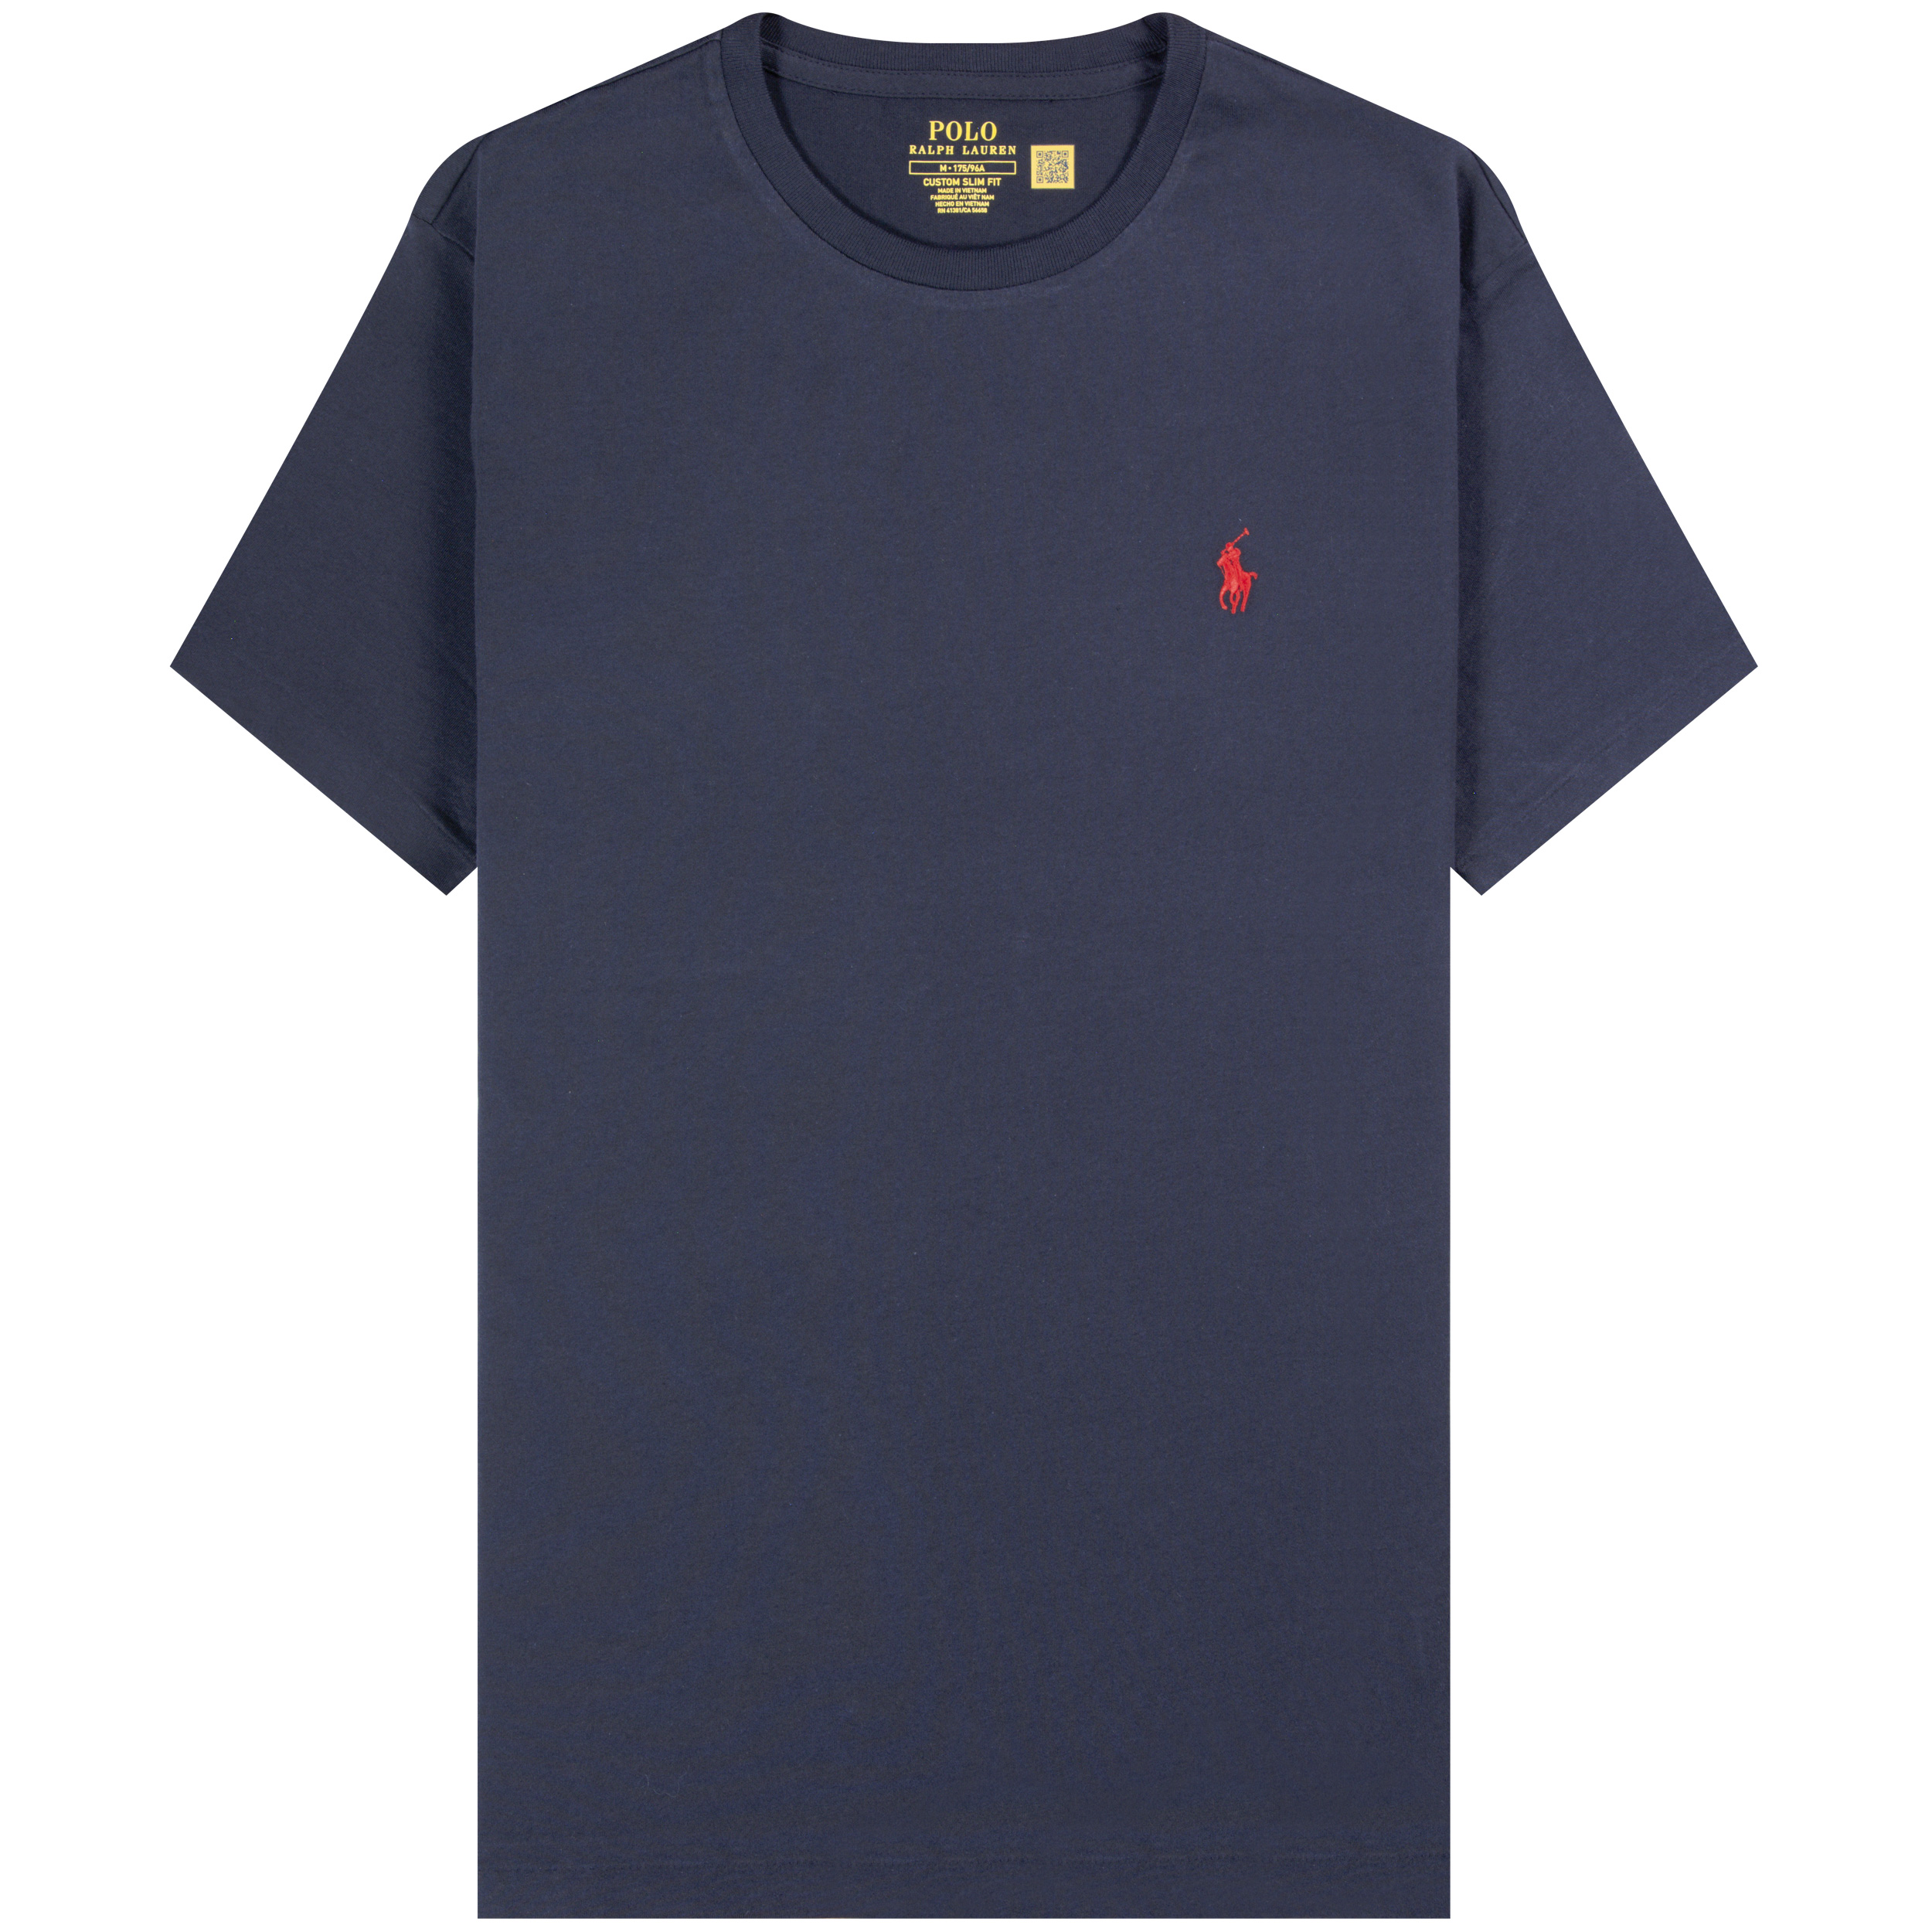 Polo Ralph Lauren ’Core Classic’ Crew Neck T-Shirt Navy